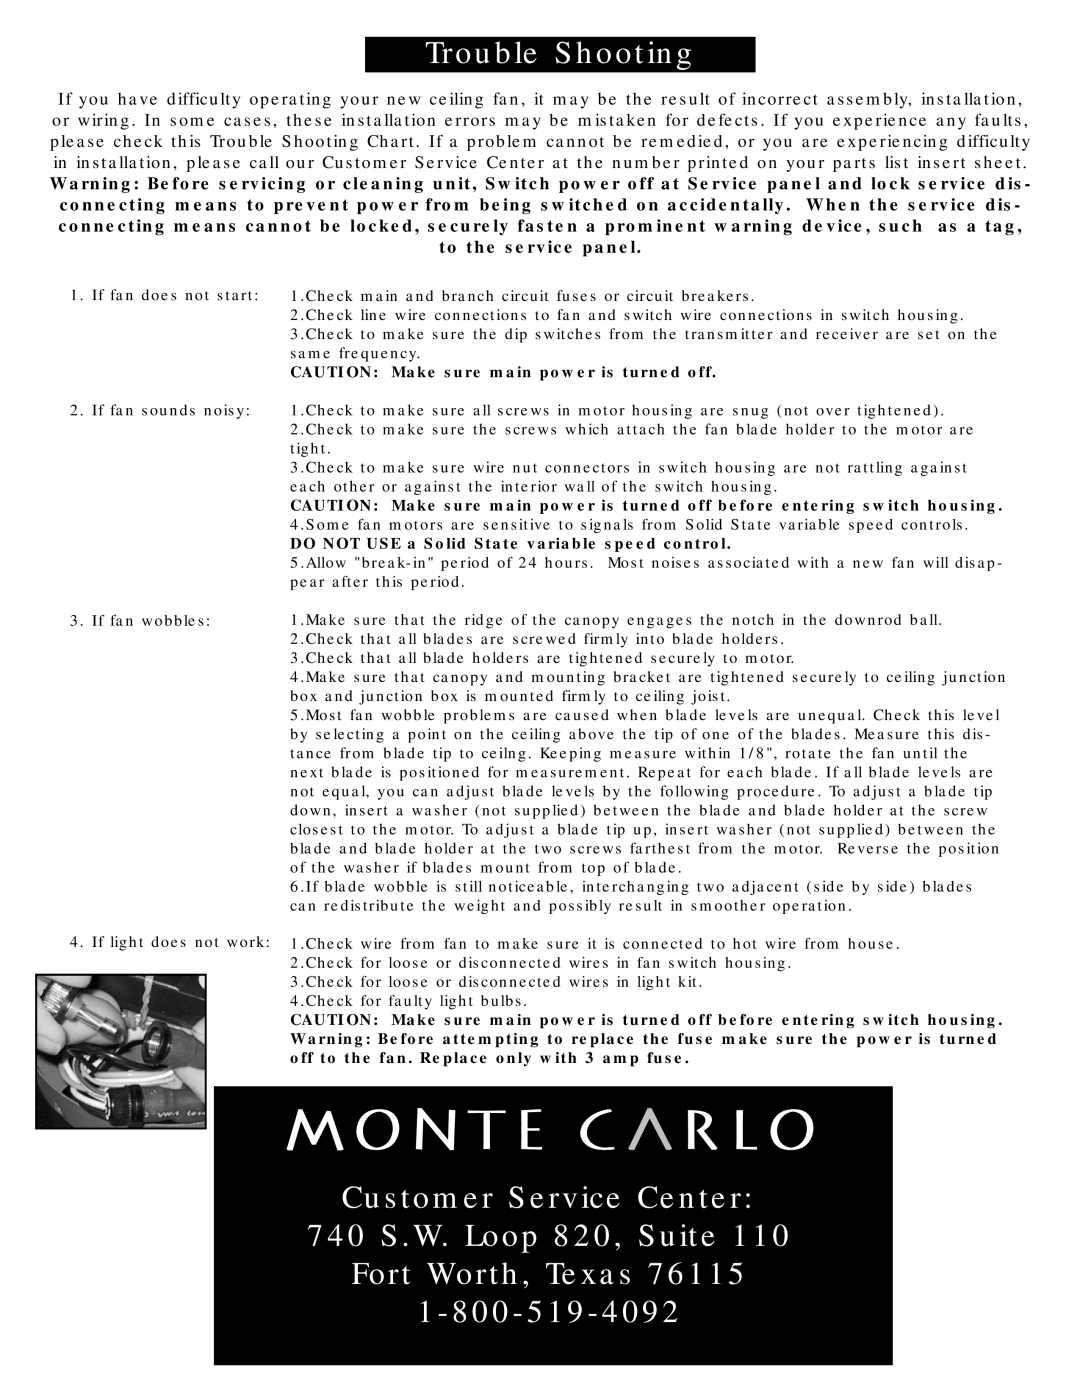 Monte Carlo Fan Company 5MYR56 owner manual Customer Service Center 740 S.W. Loop 820, Suite 